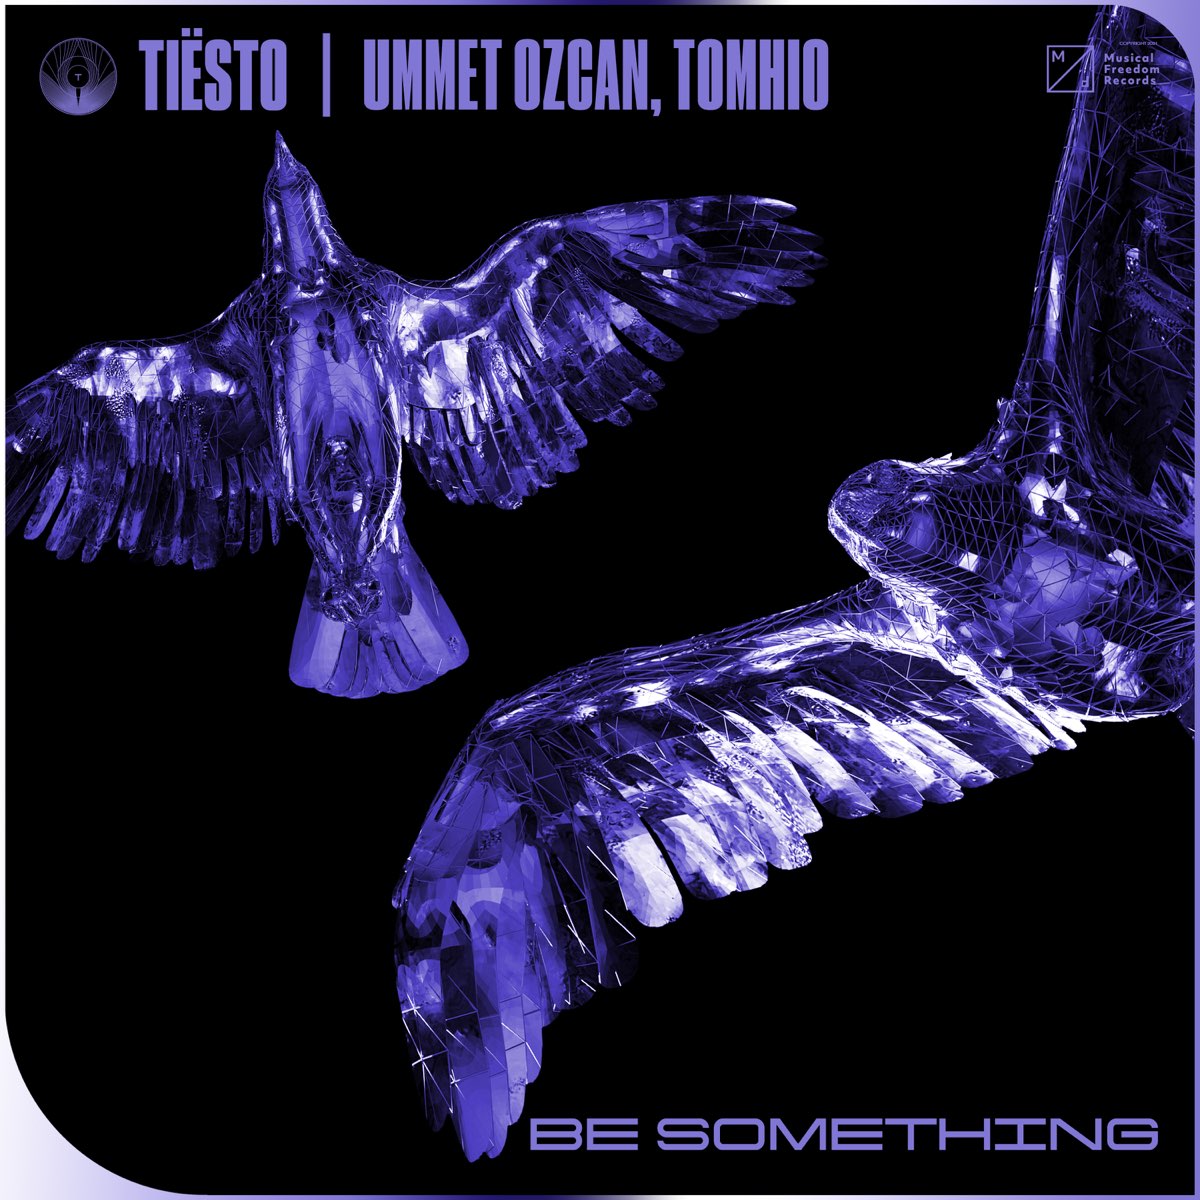 Tiësto, Ummet Ozcan, & Tomhio — Be Something cover artwork